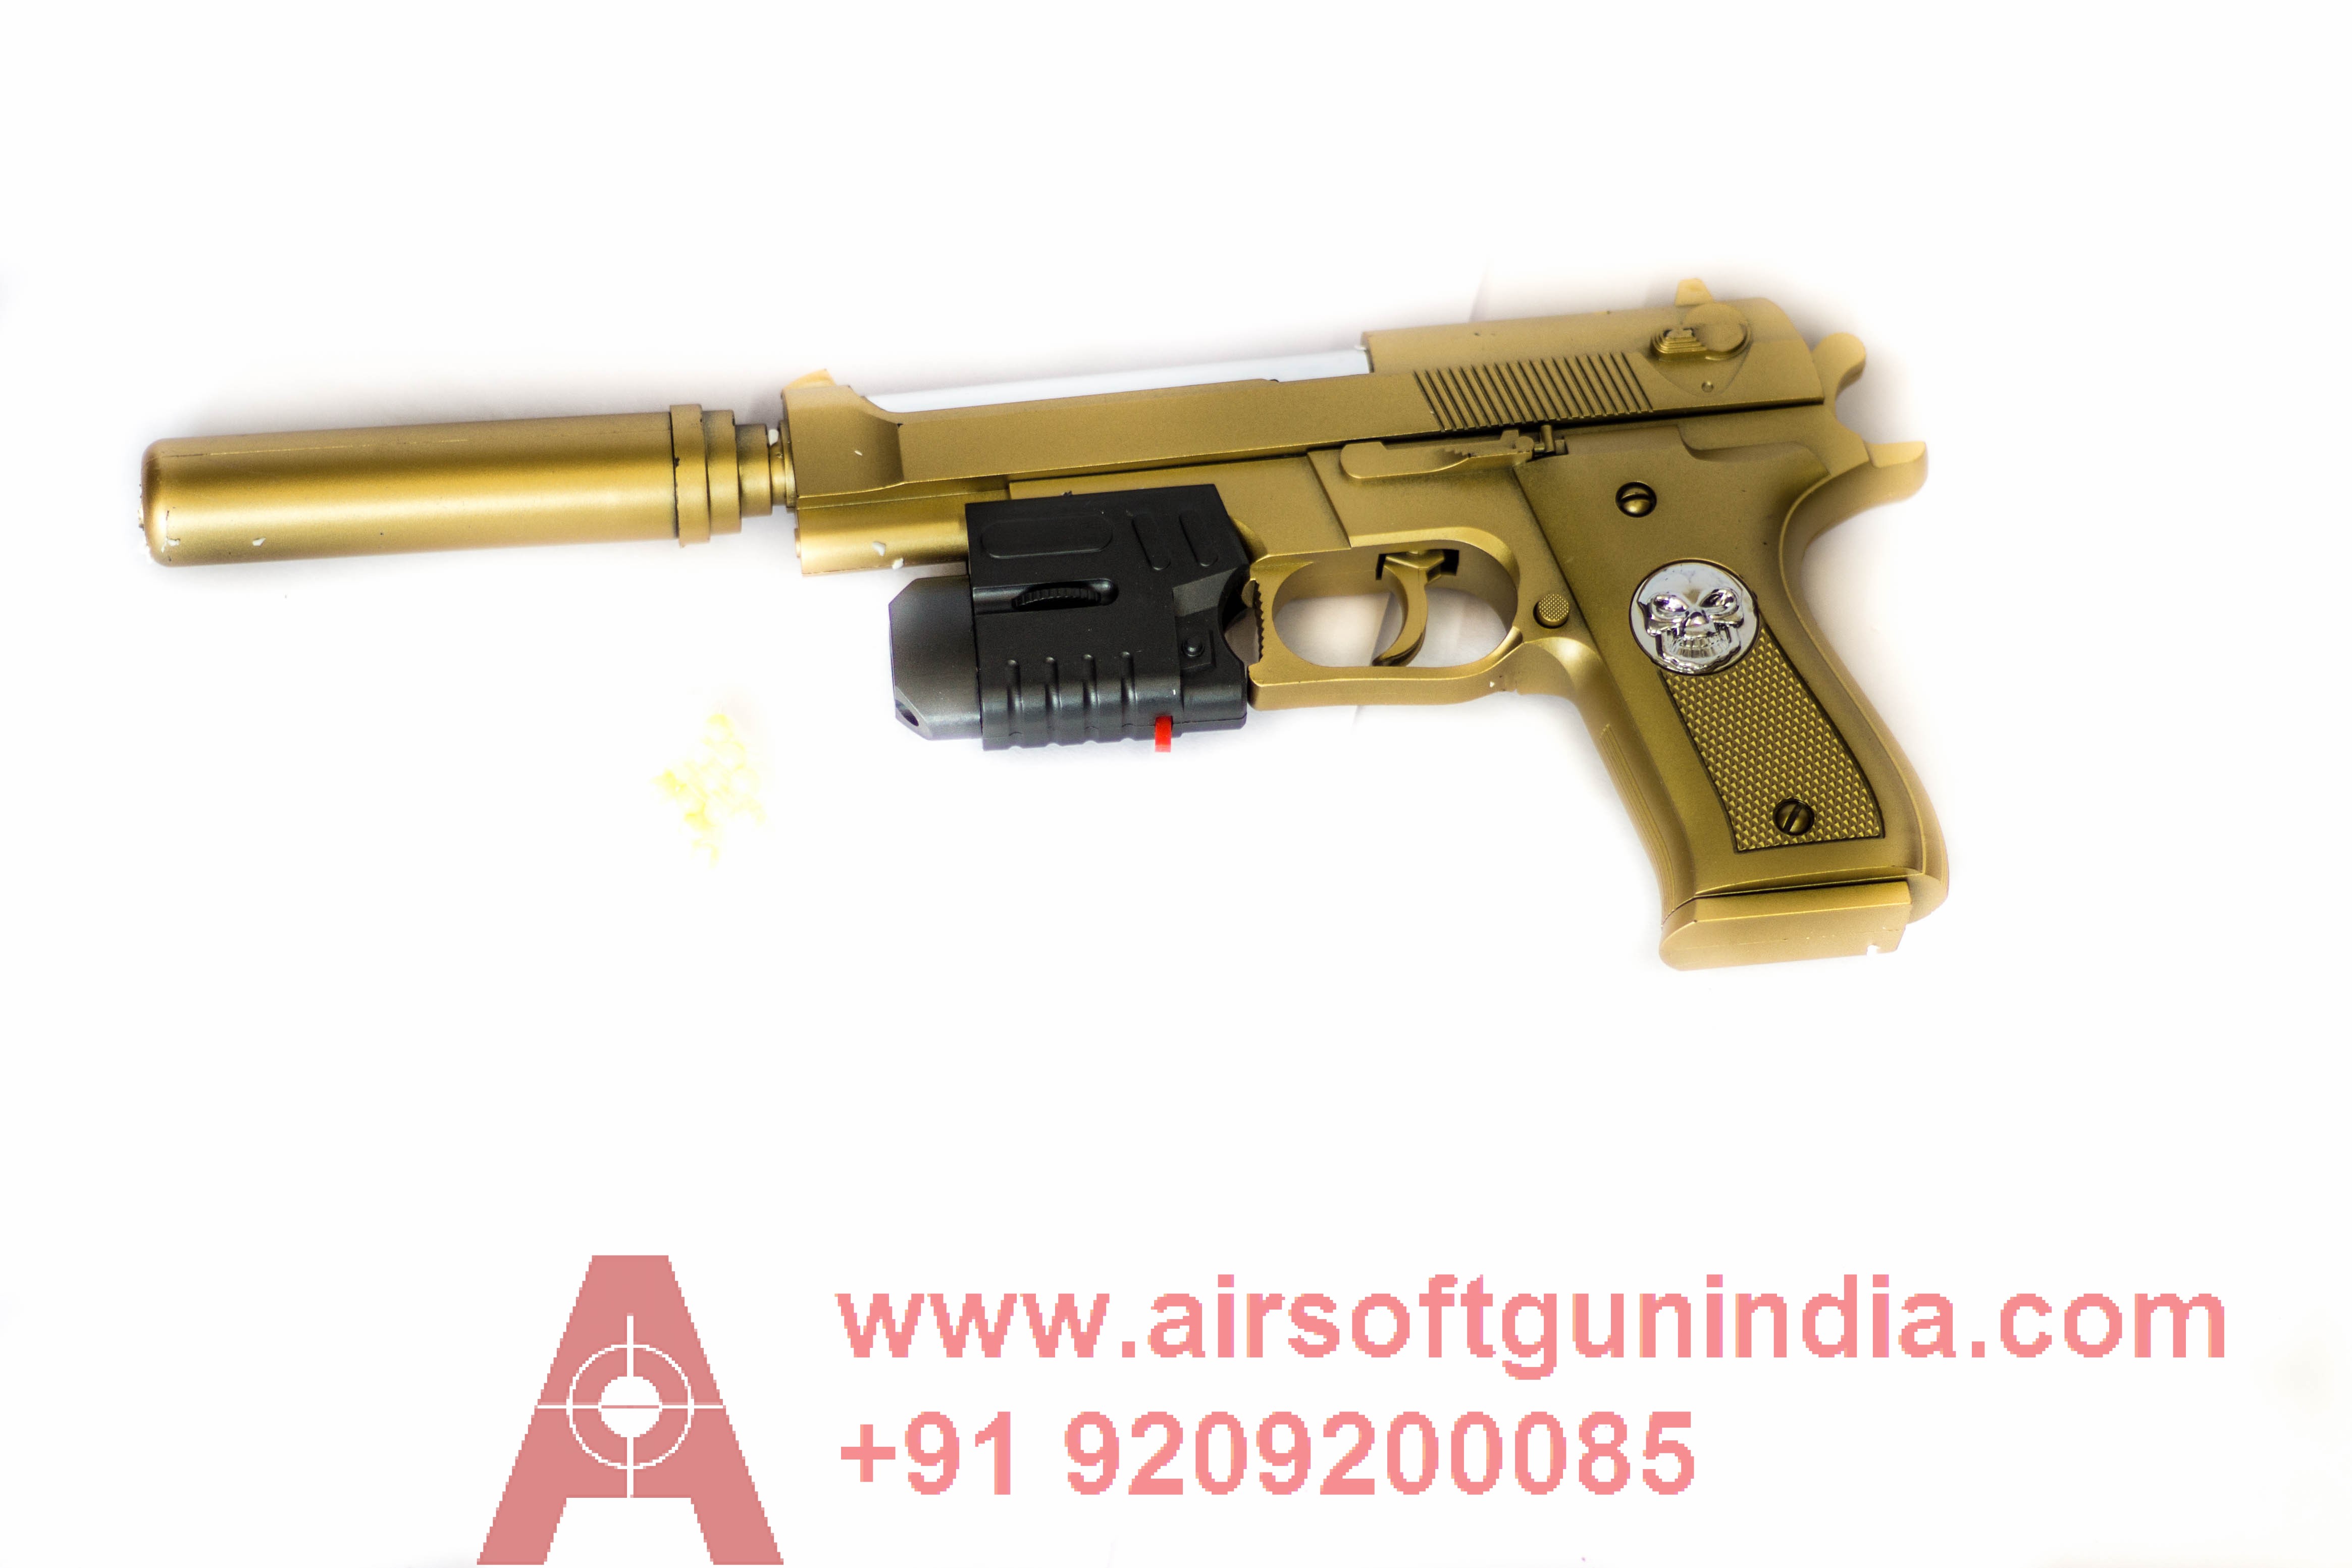 BARETTA M9 GOLDEN 007D SPRING PISTOL BY AIRSOFT GUN INDIA